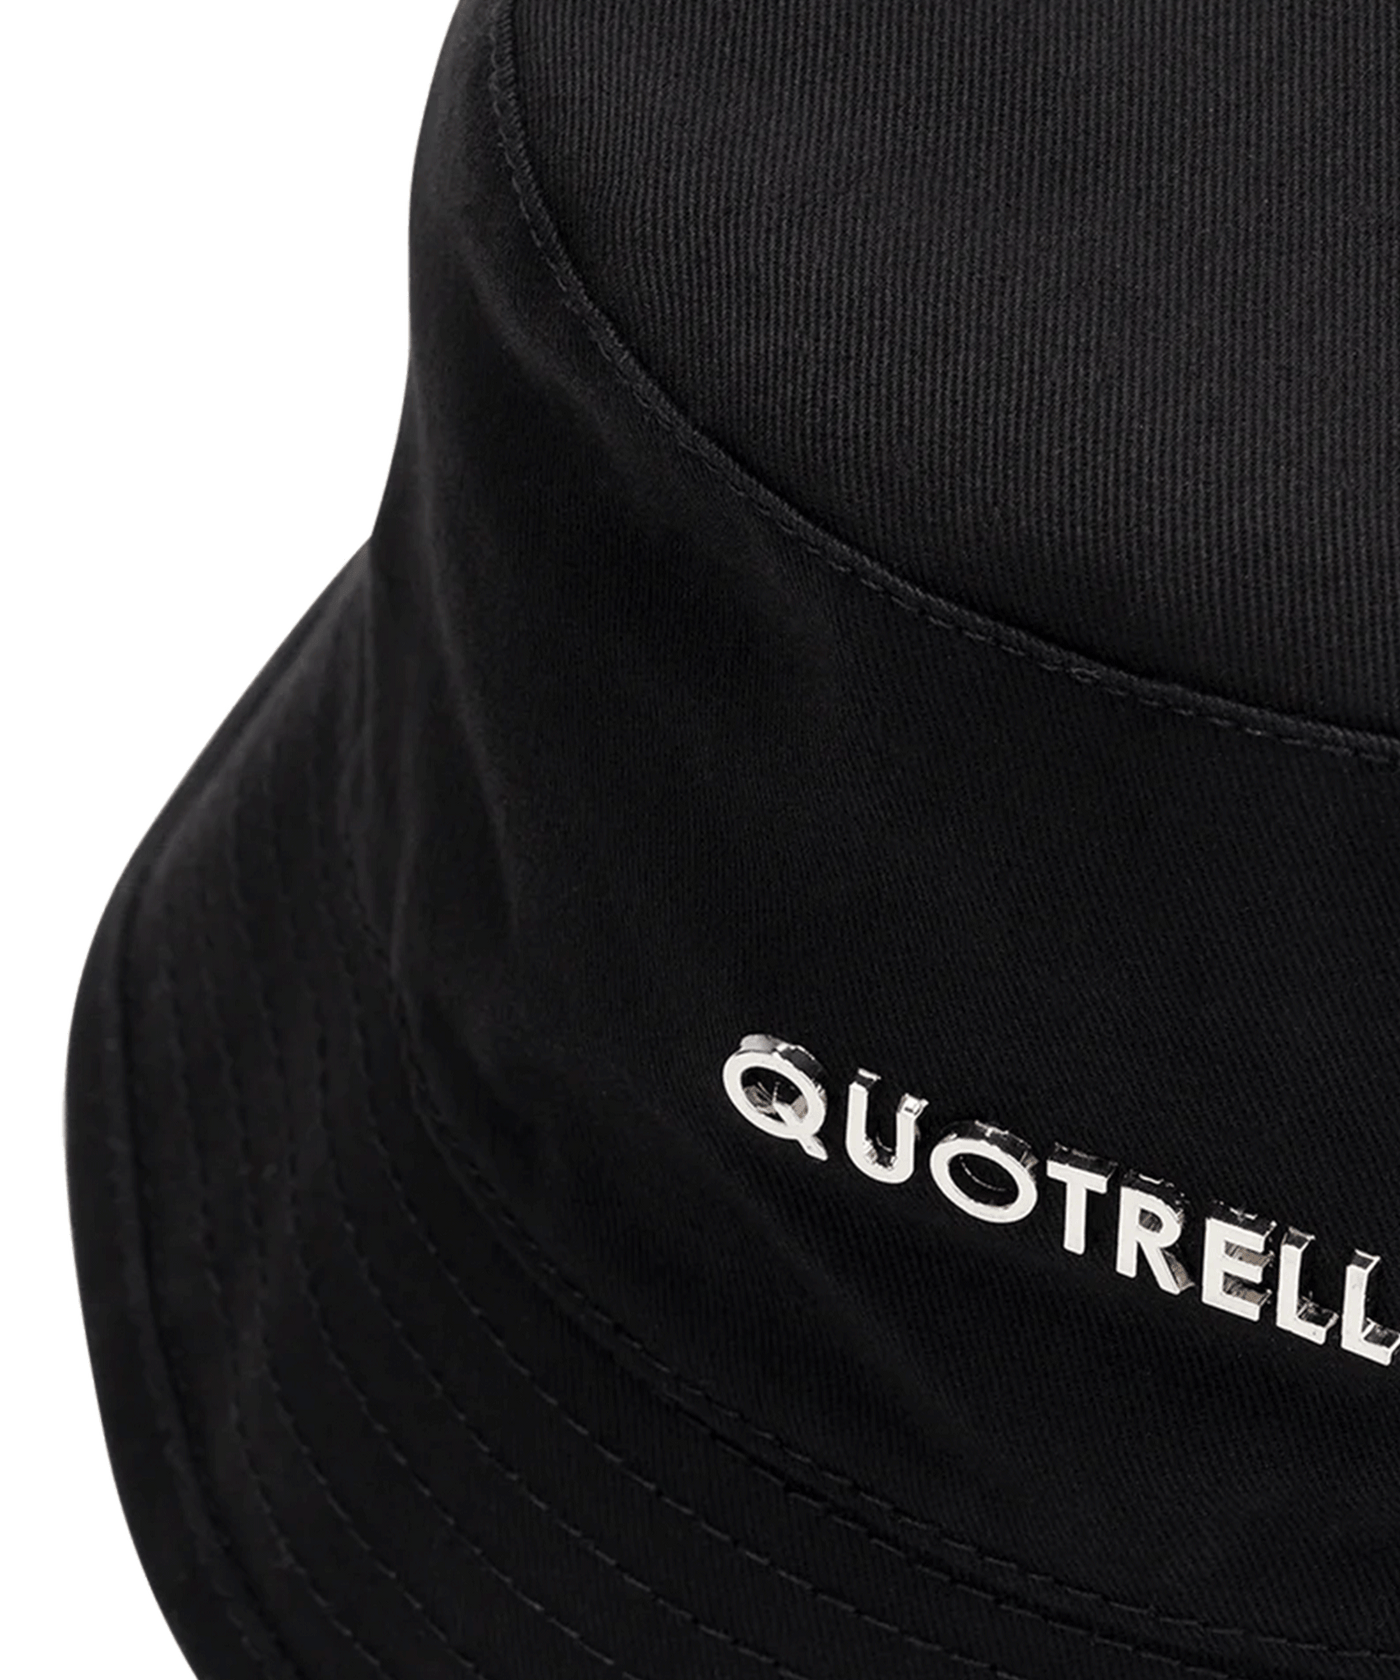 Quotrell - Modena - Buckethat - Black